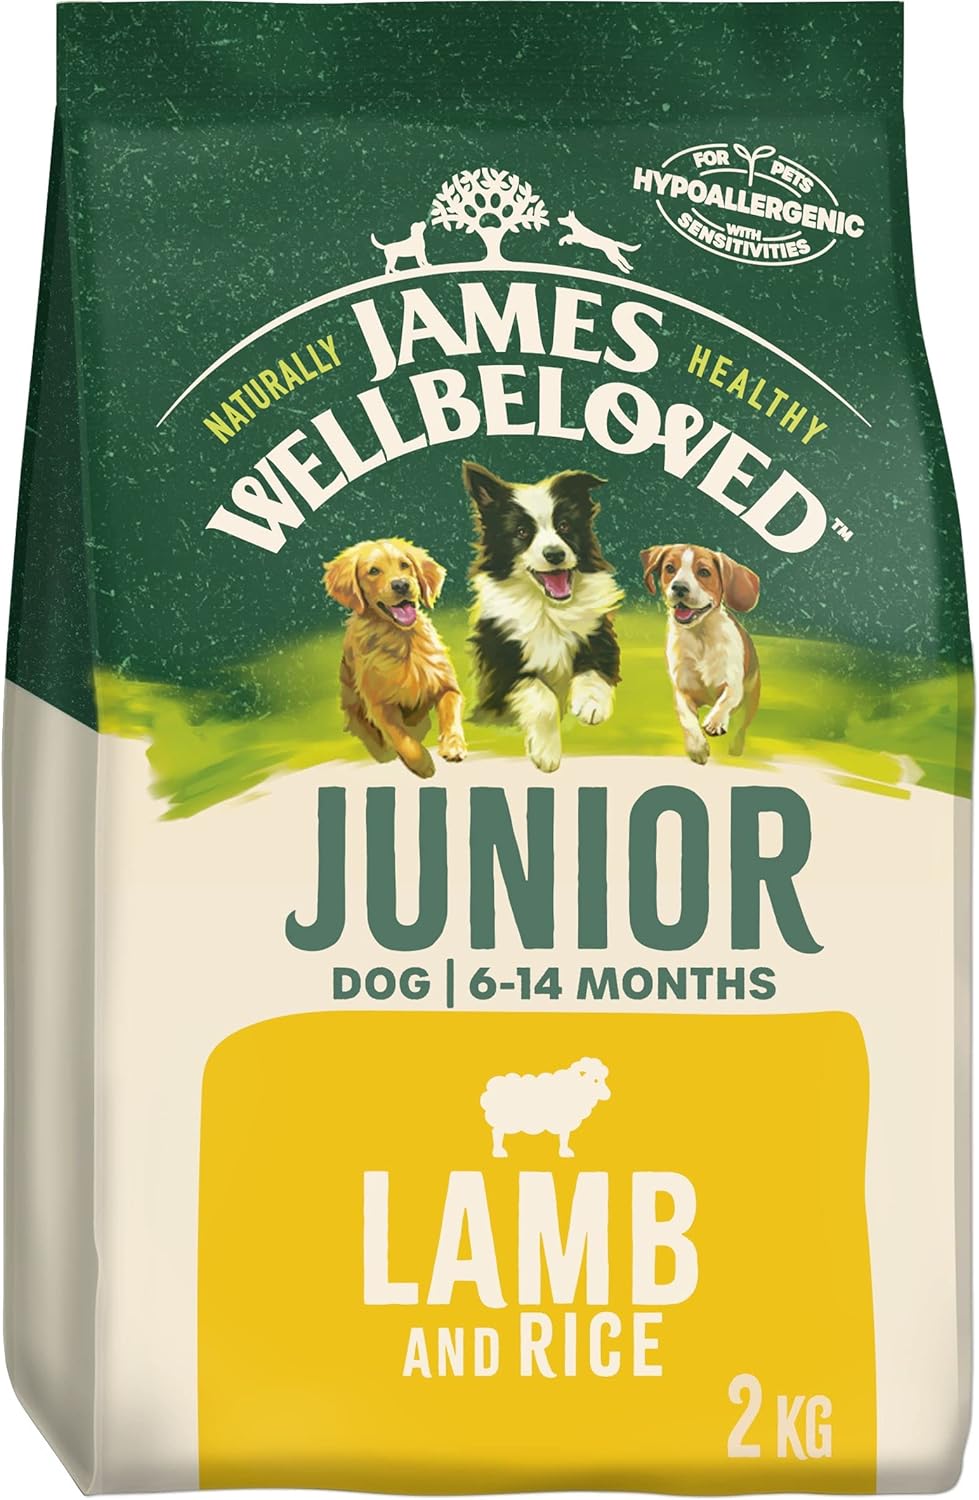 James Wellbeloved Junior Lamb & Rice 2 kg Bag, Hypoallergenic Dry Dog Food?02JWJL2